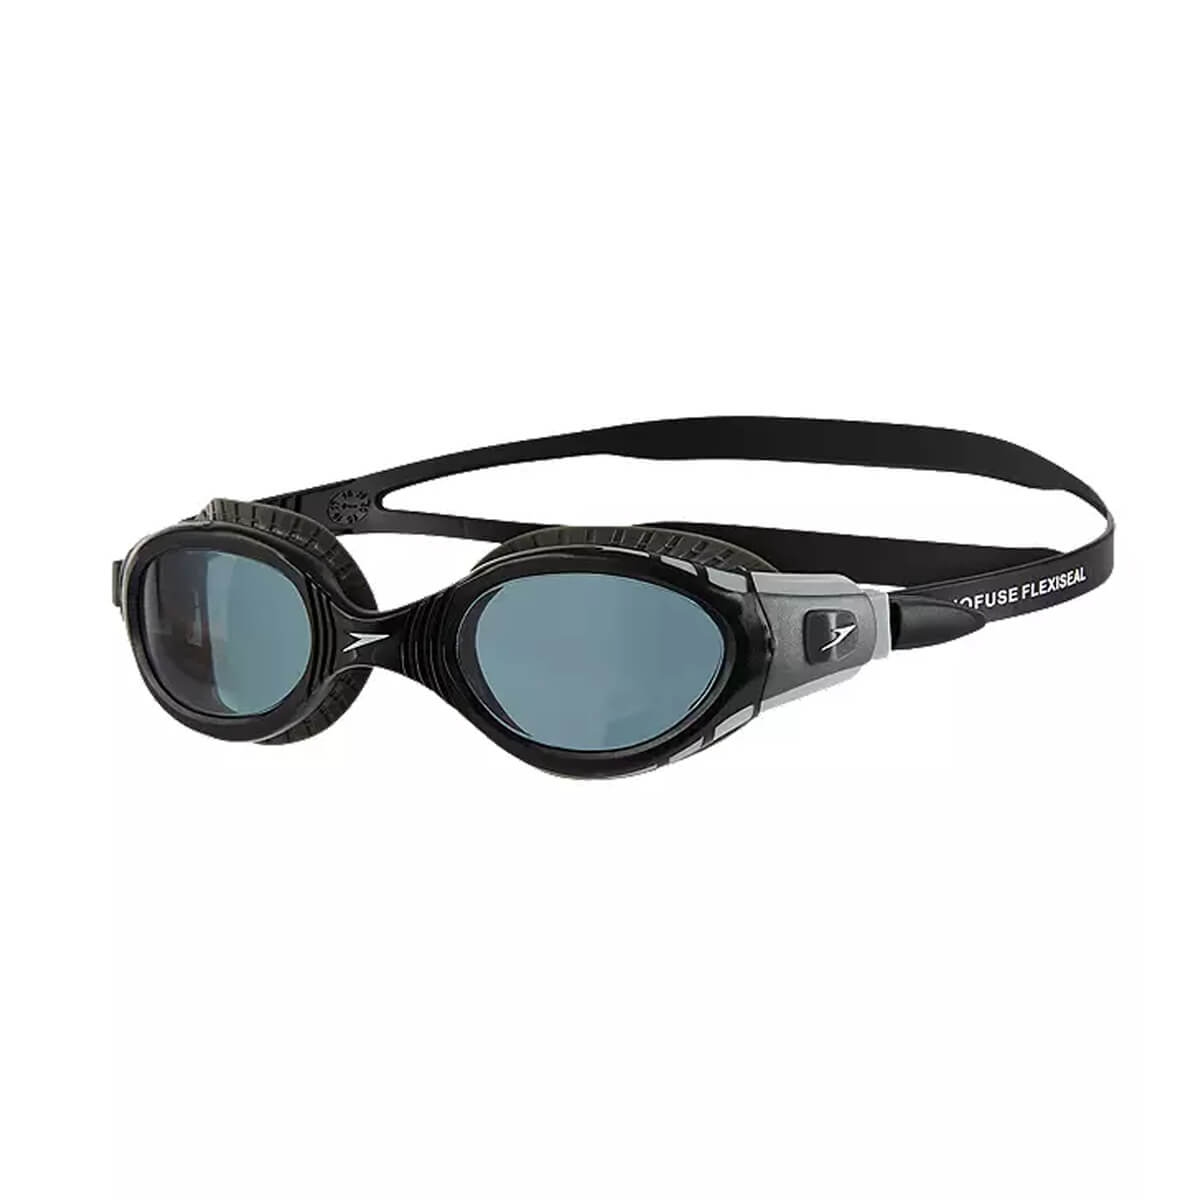 Speedo Futura Biofuse Flexiseal Goggles - Black/Grey